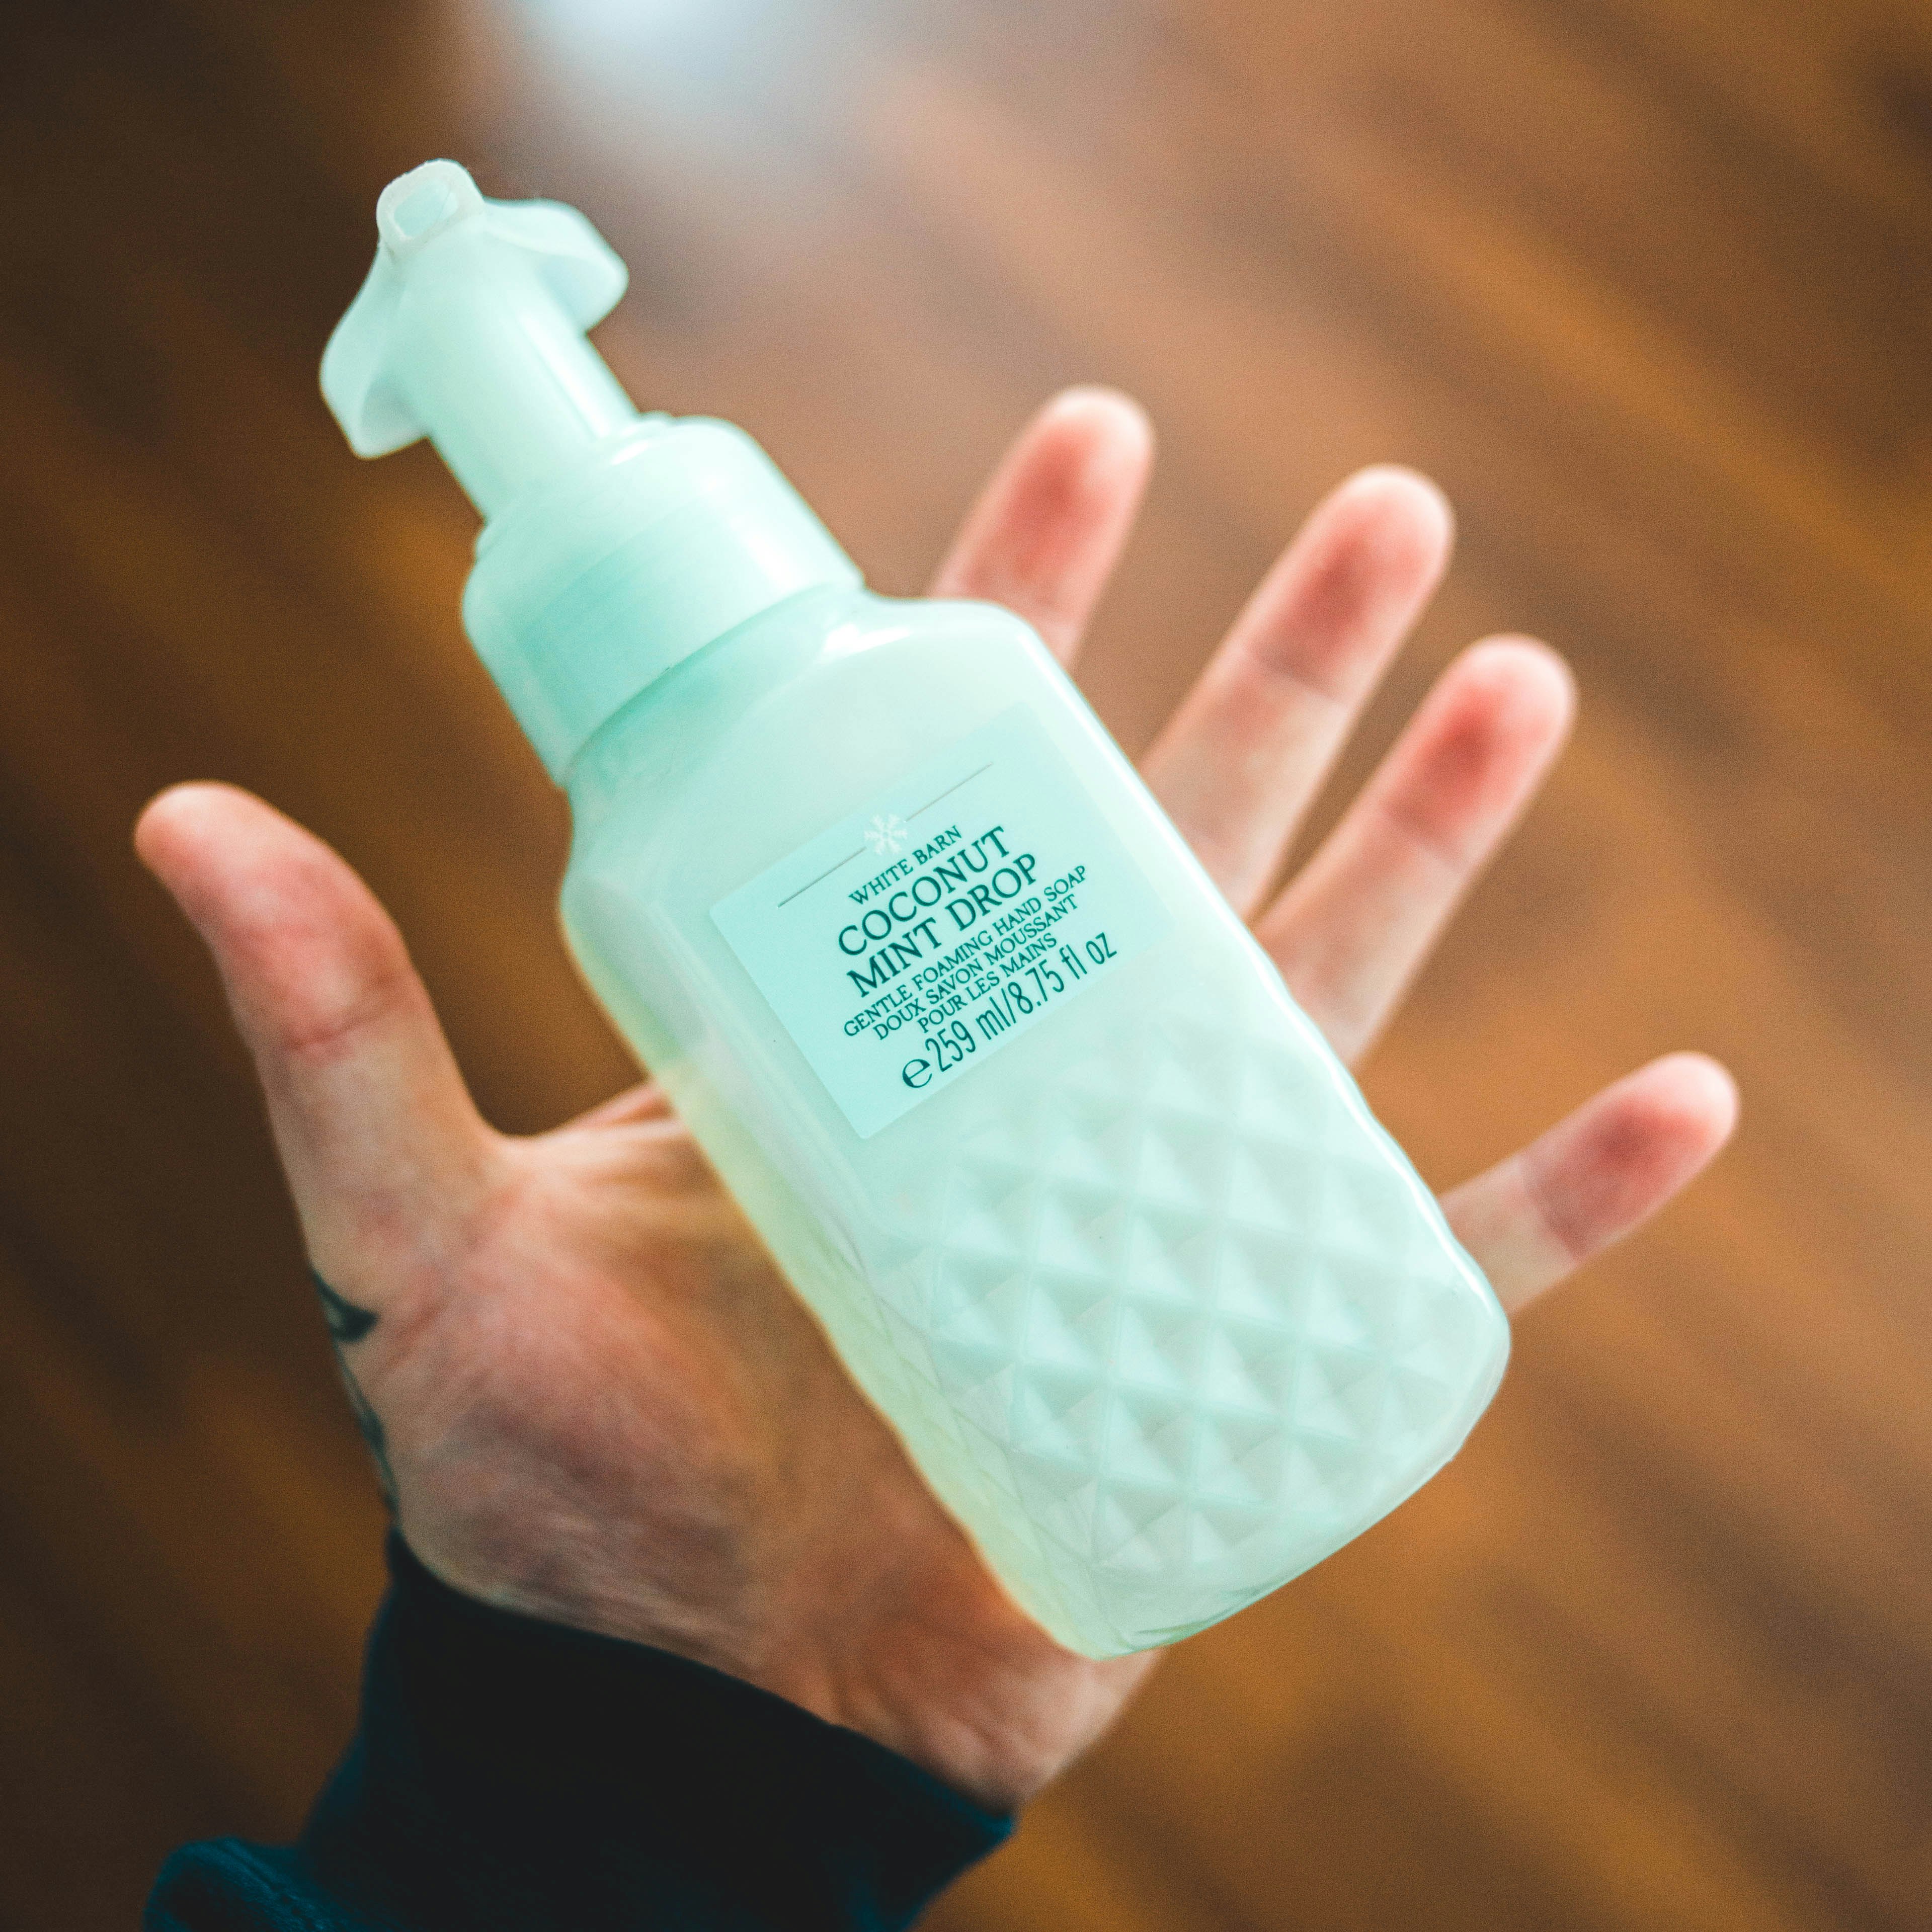 person holding white plastic pump bottle